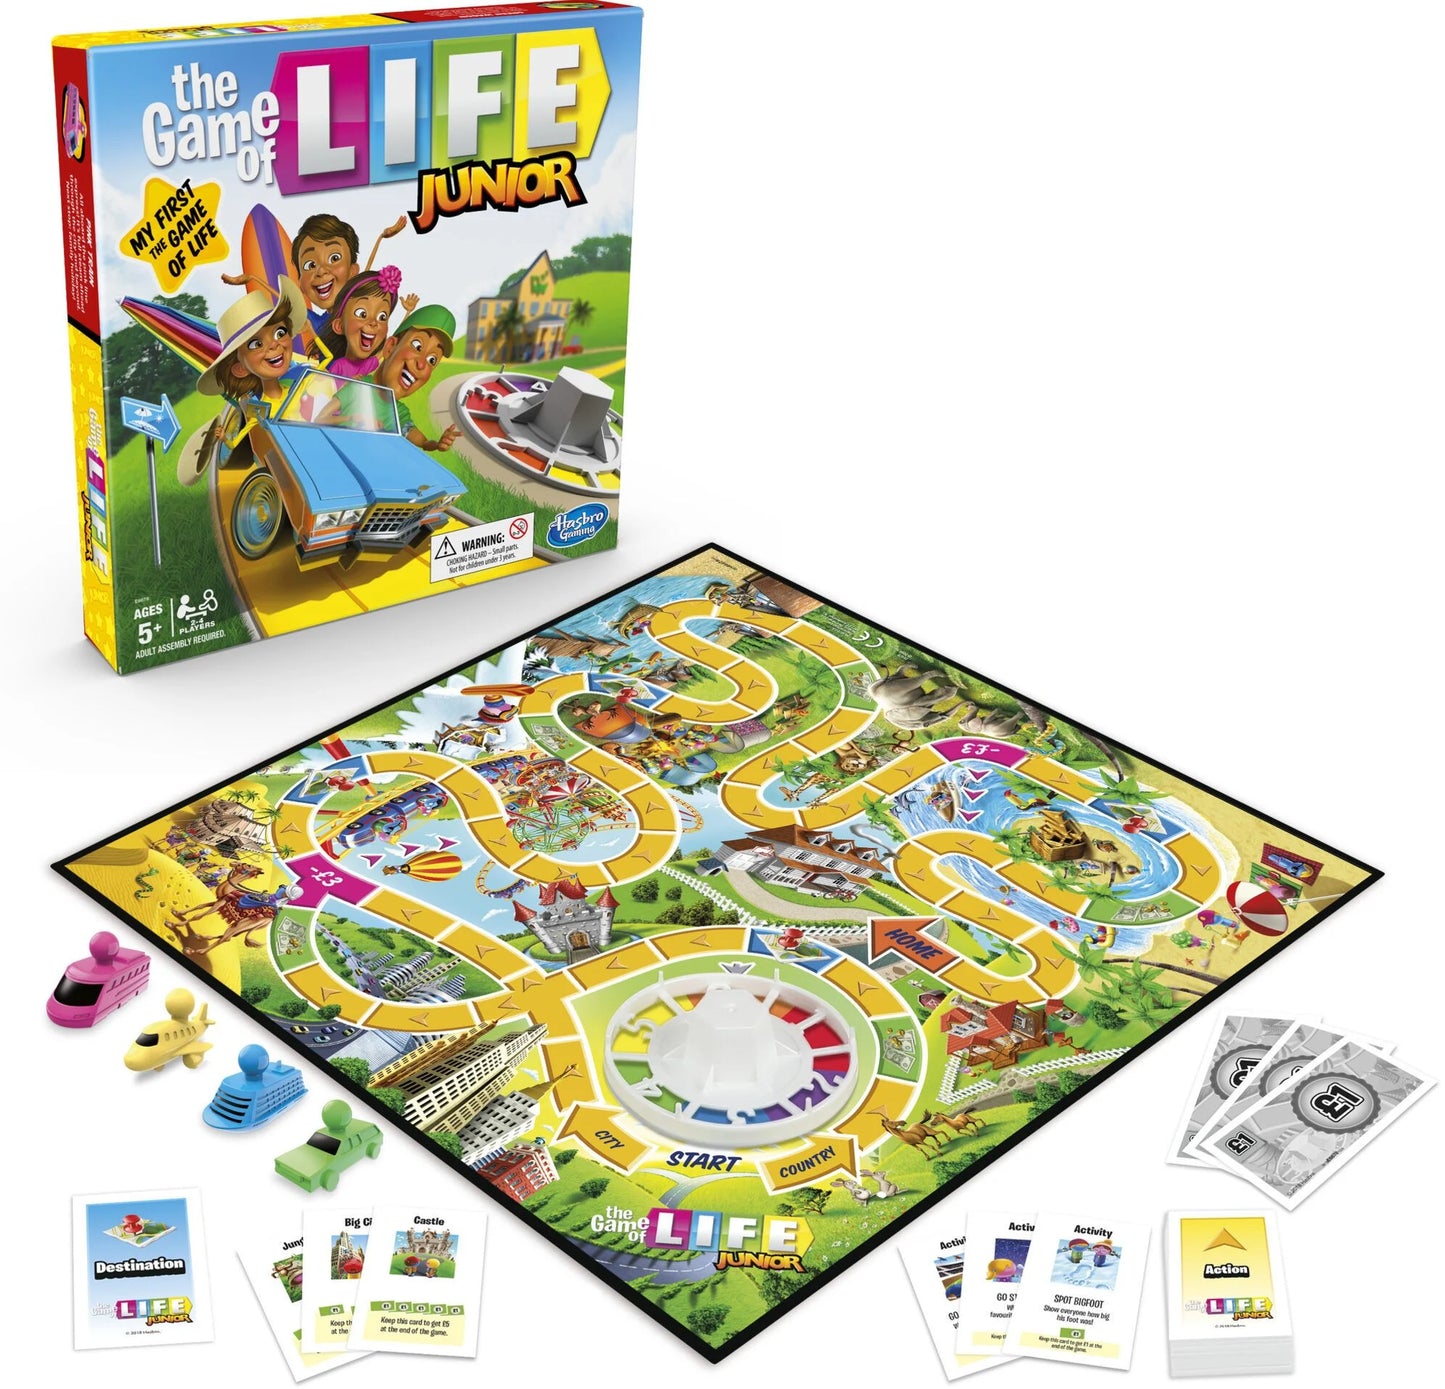 Game of Life Junior Hasbro Games